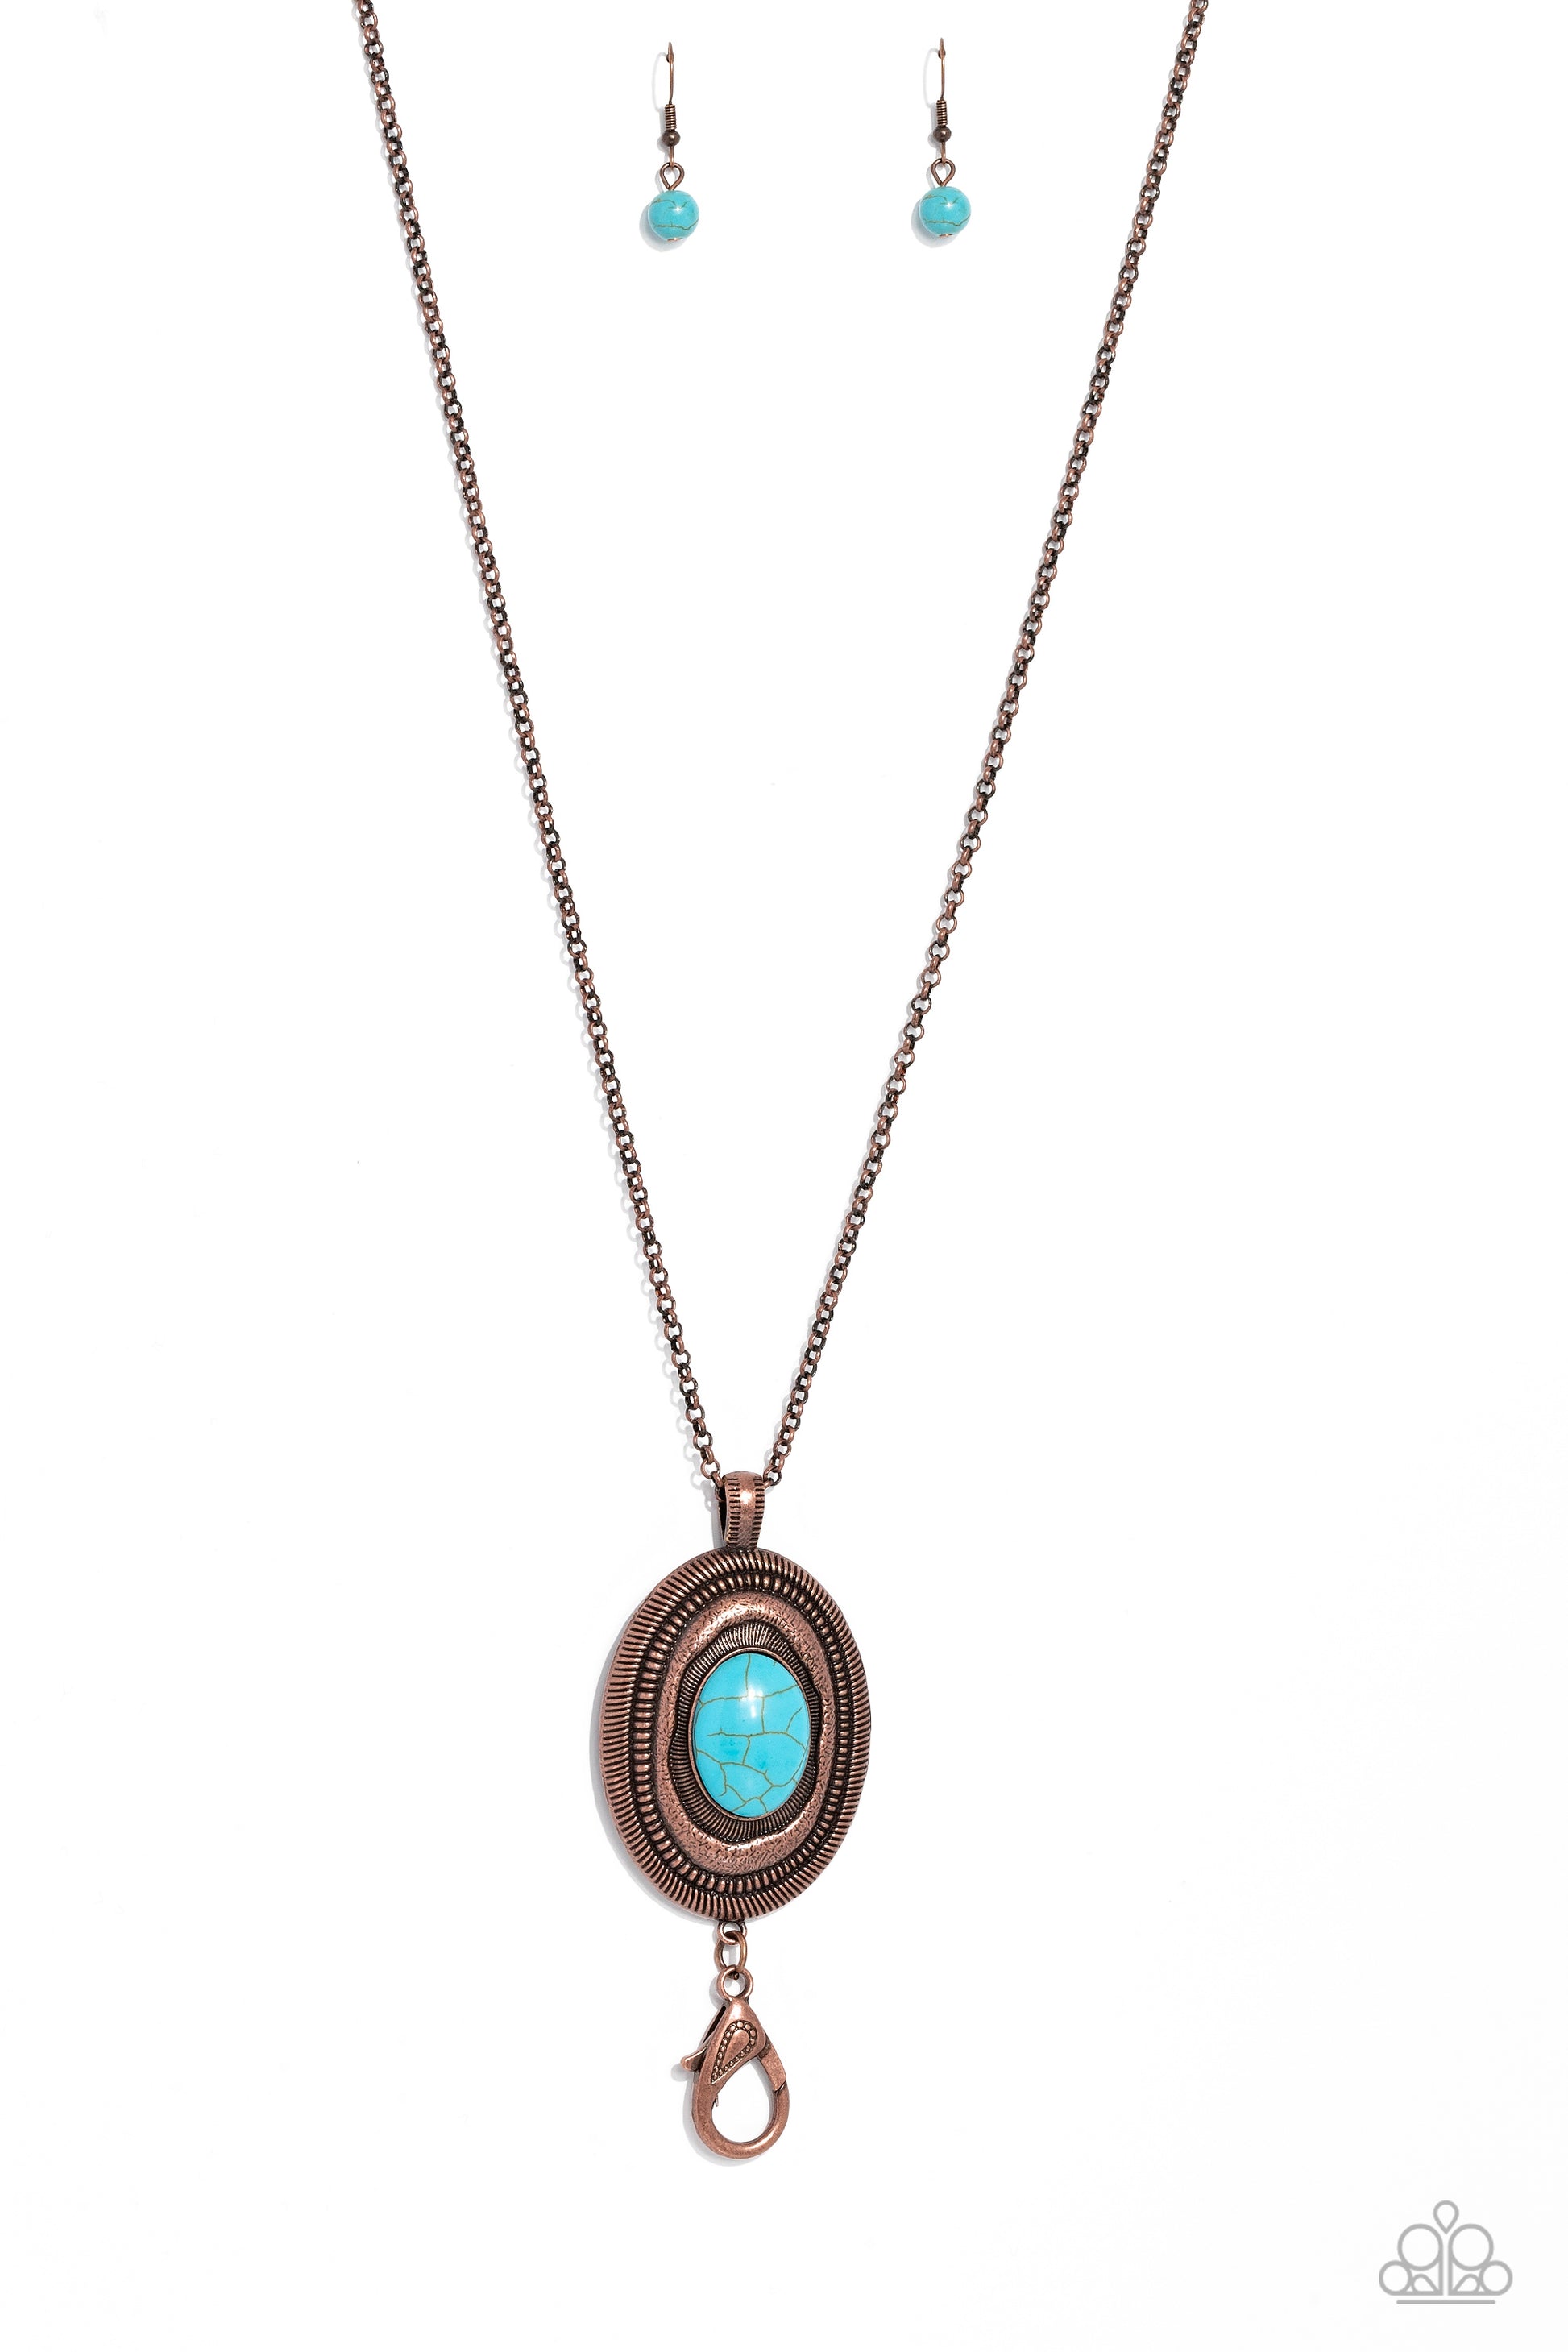 Sierra Sage - copper - Paparazzi LANYARD necklace